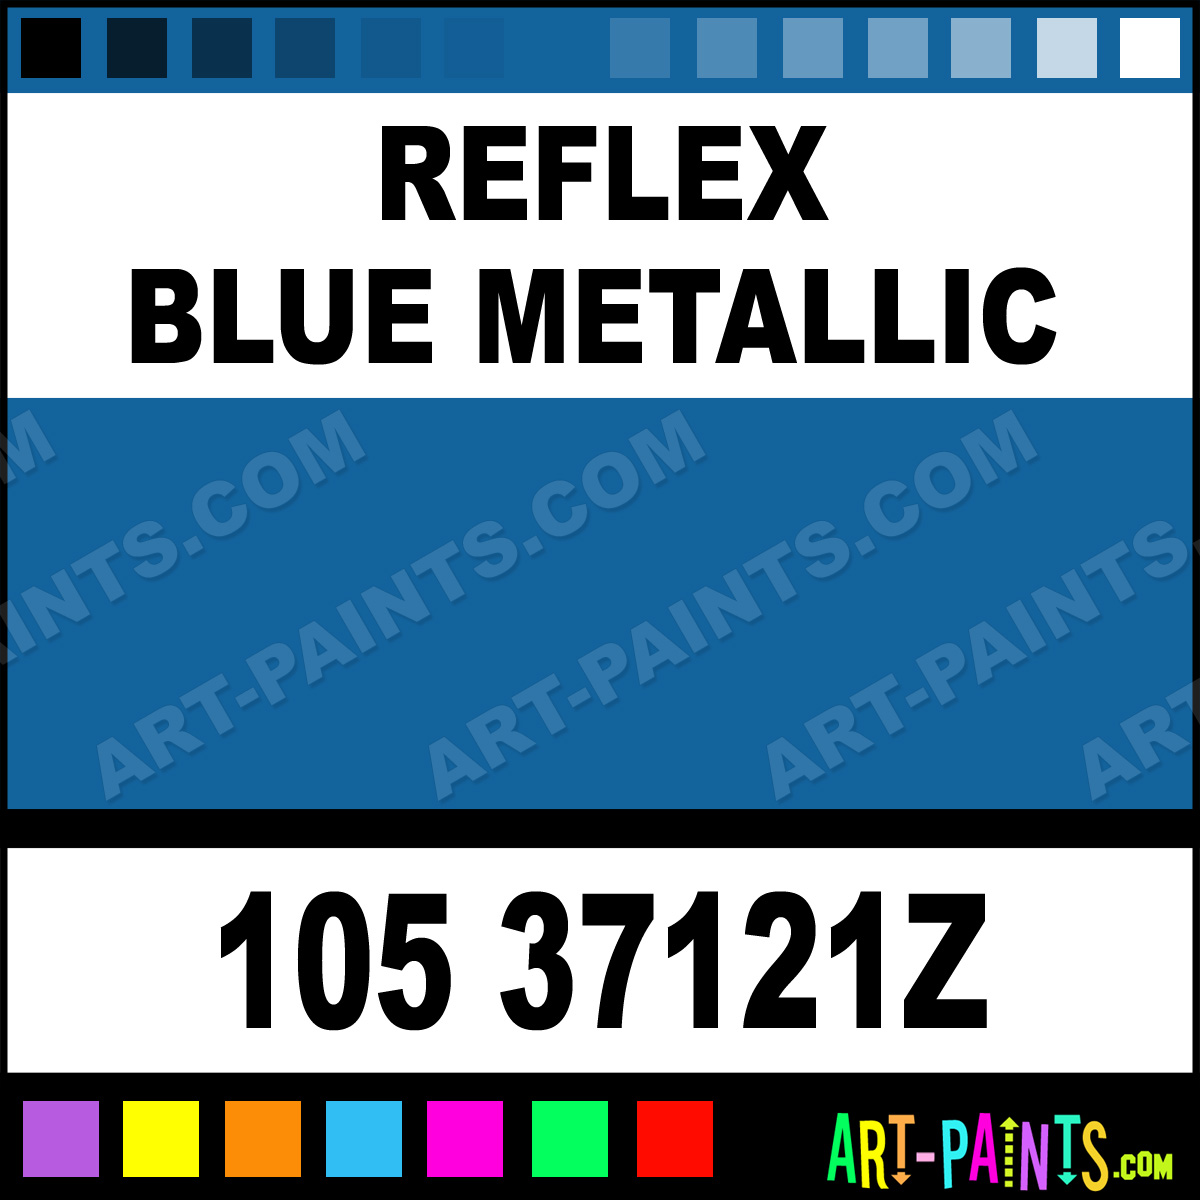 Reflex-Blue-Metallic-lg.jpg